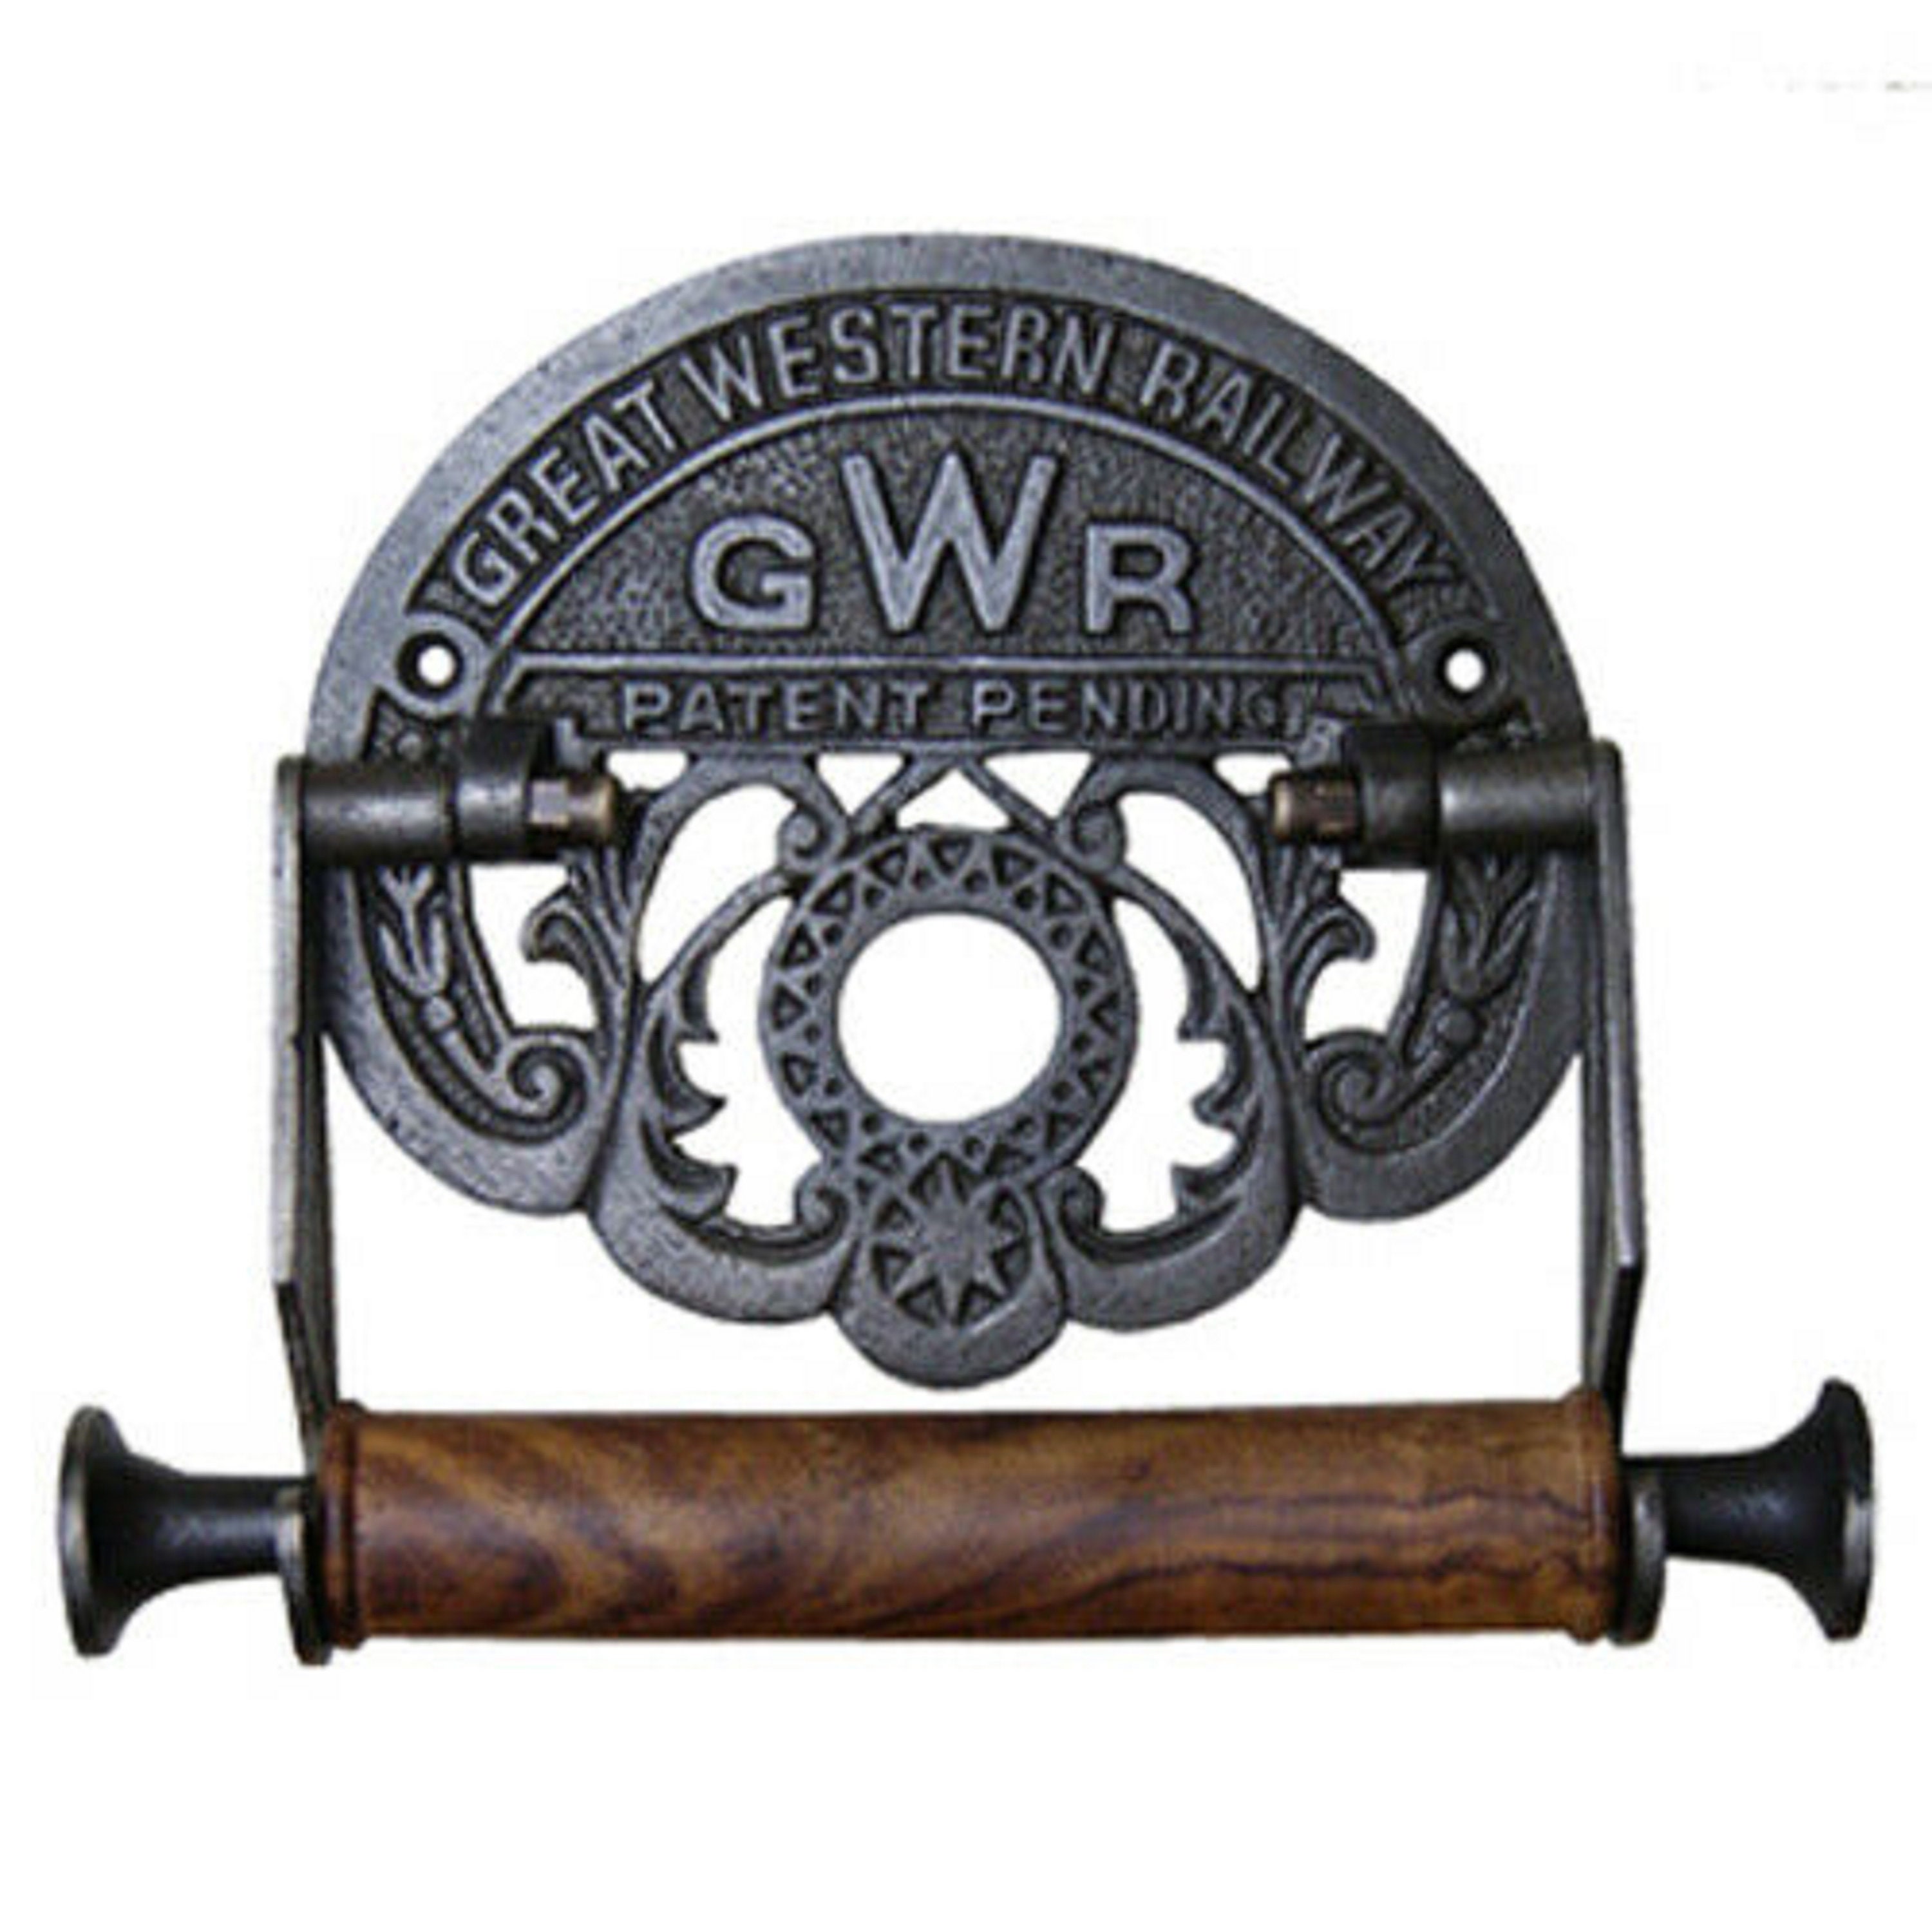 GWR Cast Iron Toilet Roll Holder Novelty Vintage Retro GREAT WESTERN RAILWAY 